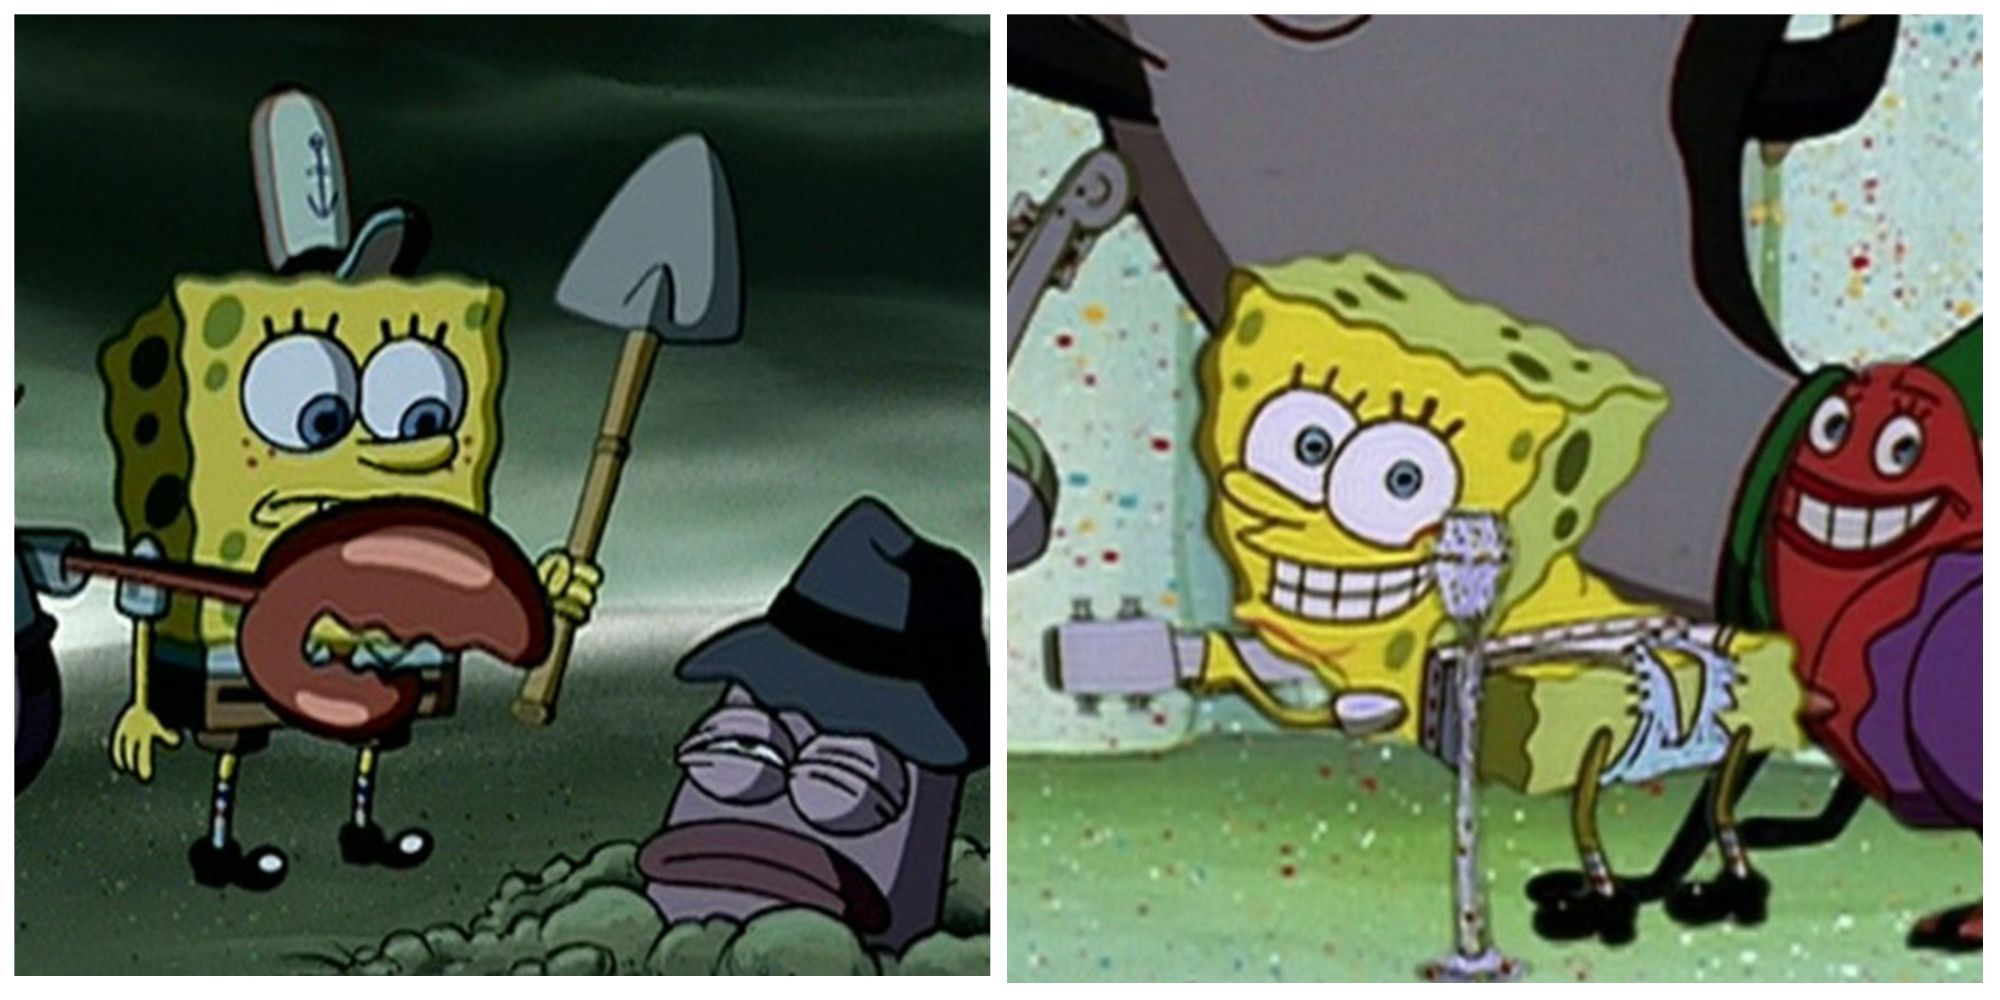 Left: SpogeBob buries a body. Right: Spongebob rips his pants. Image sources: pagelagi.com and gamerant.com